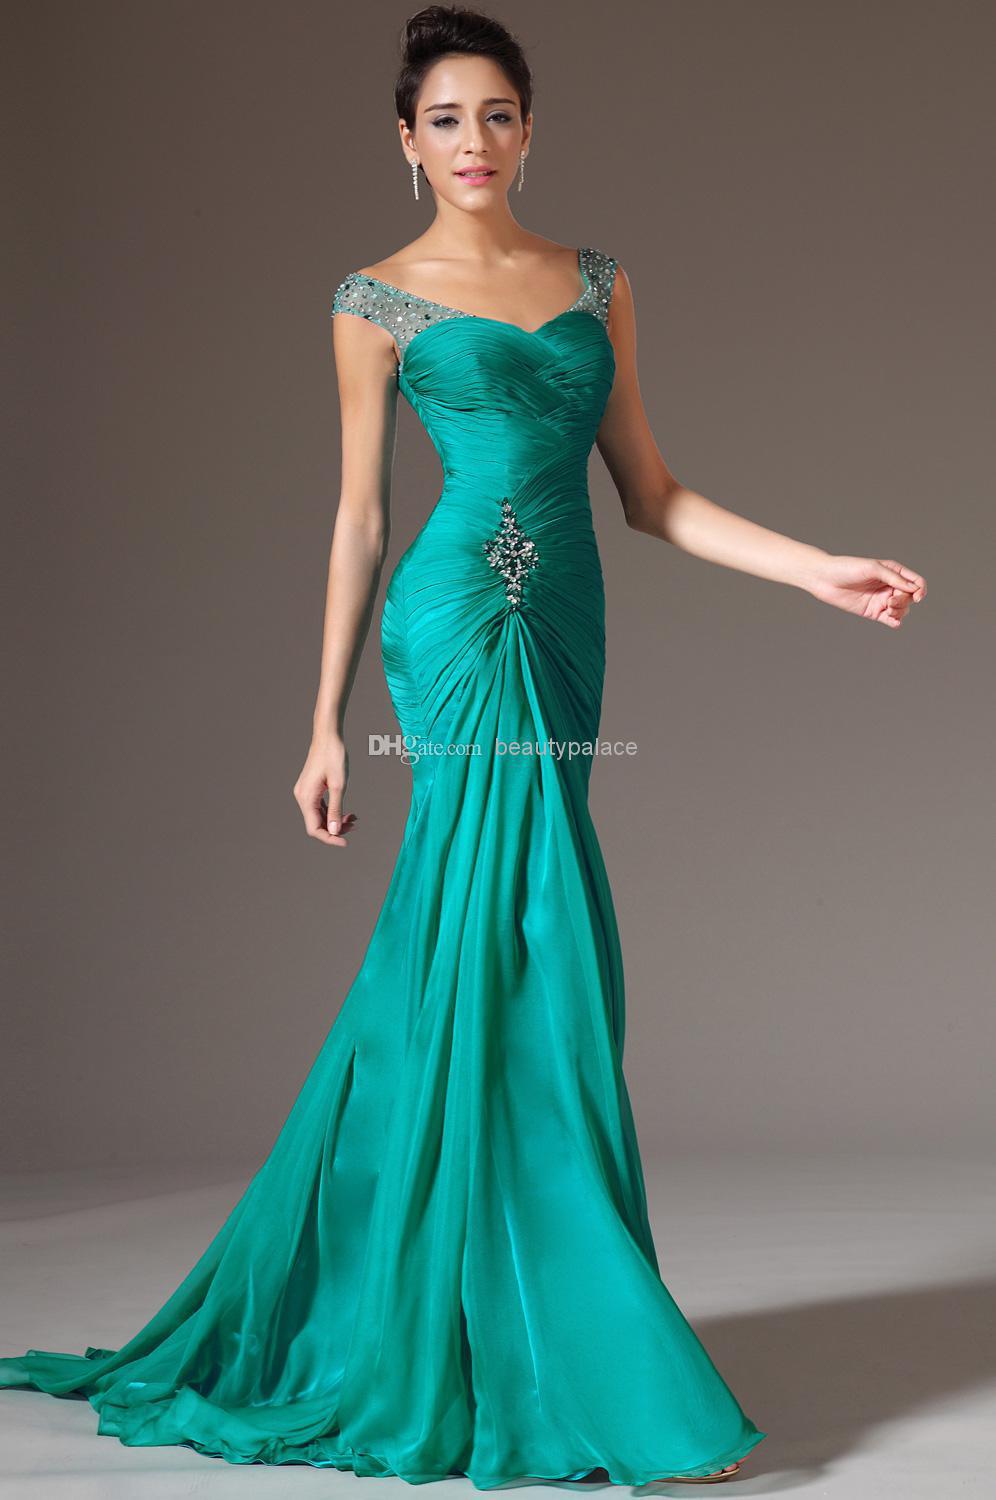 beautiful formal dresses - Dress Yp